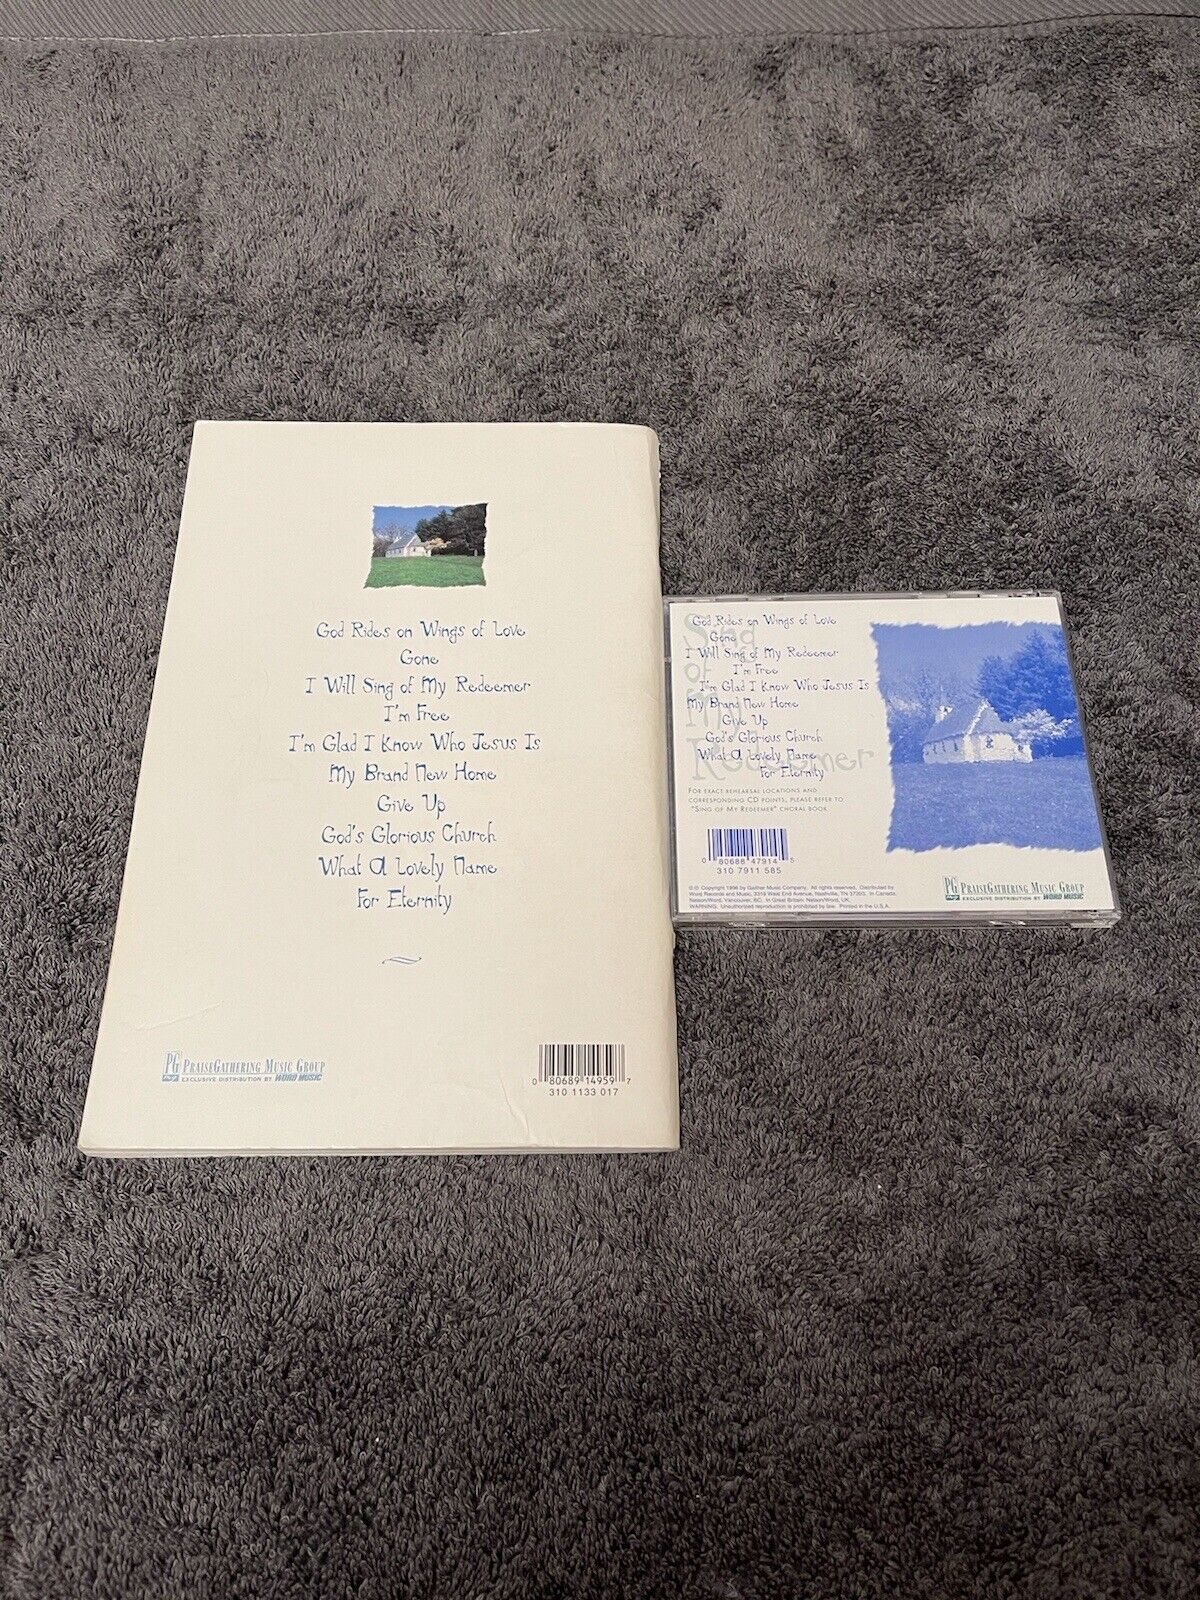 Geron Davis Sing of My Redeemer Accompaniment CD & Songbook ©1996 FREE Shipping Без бренда - фотография #2